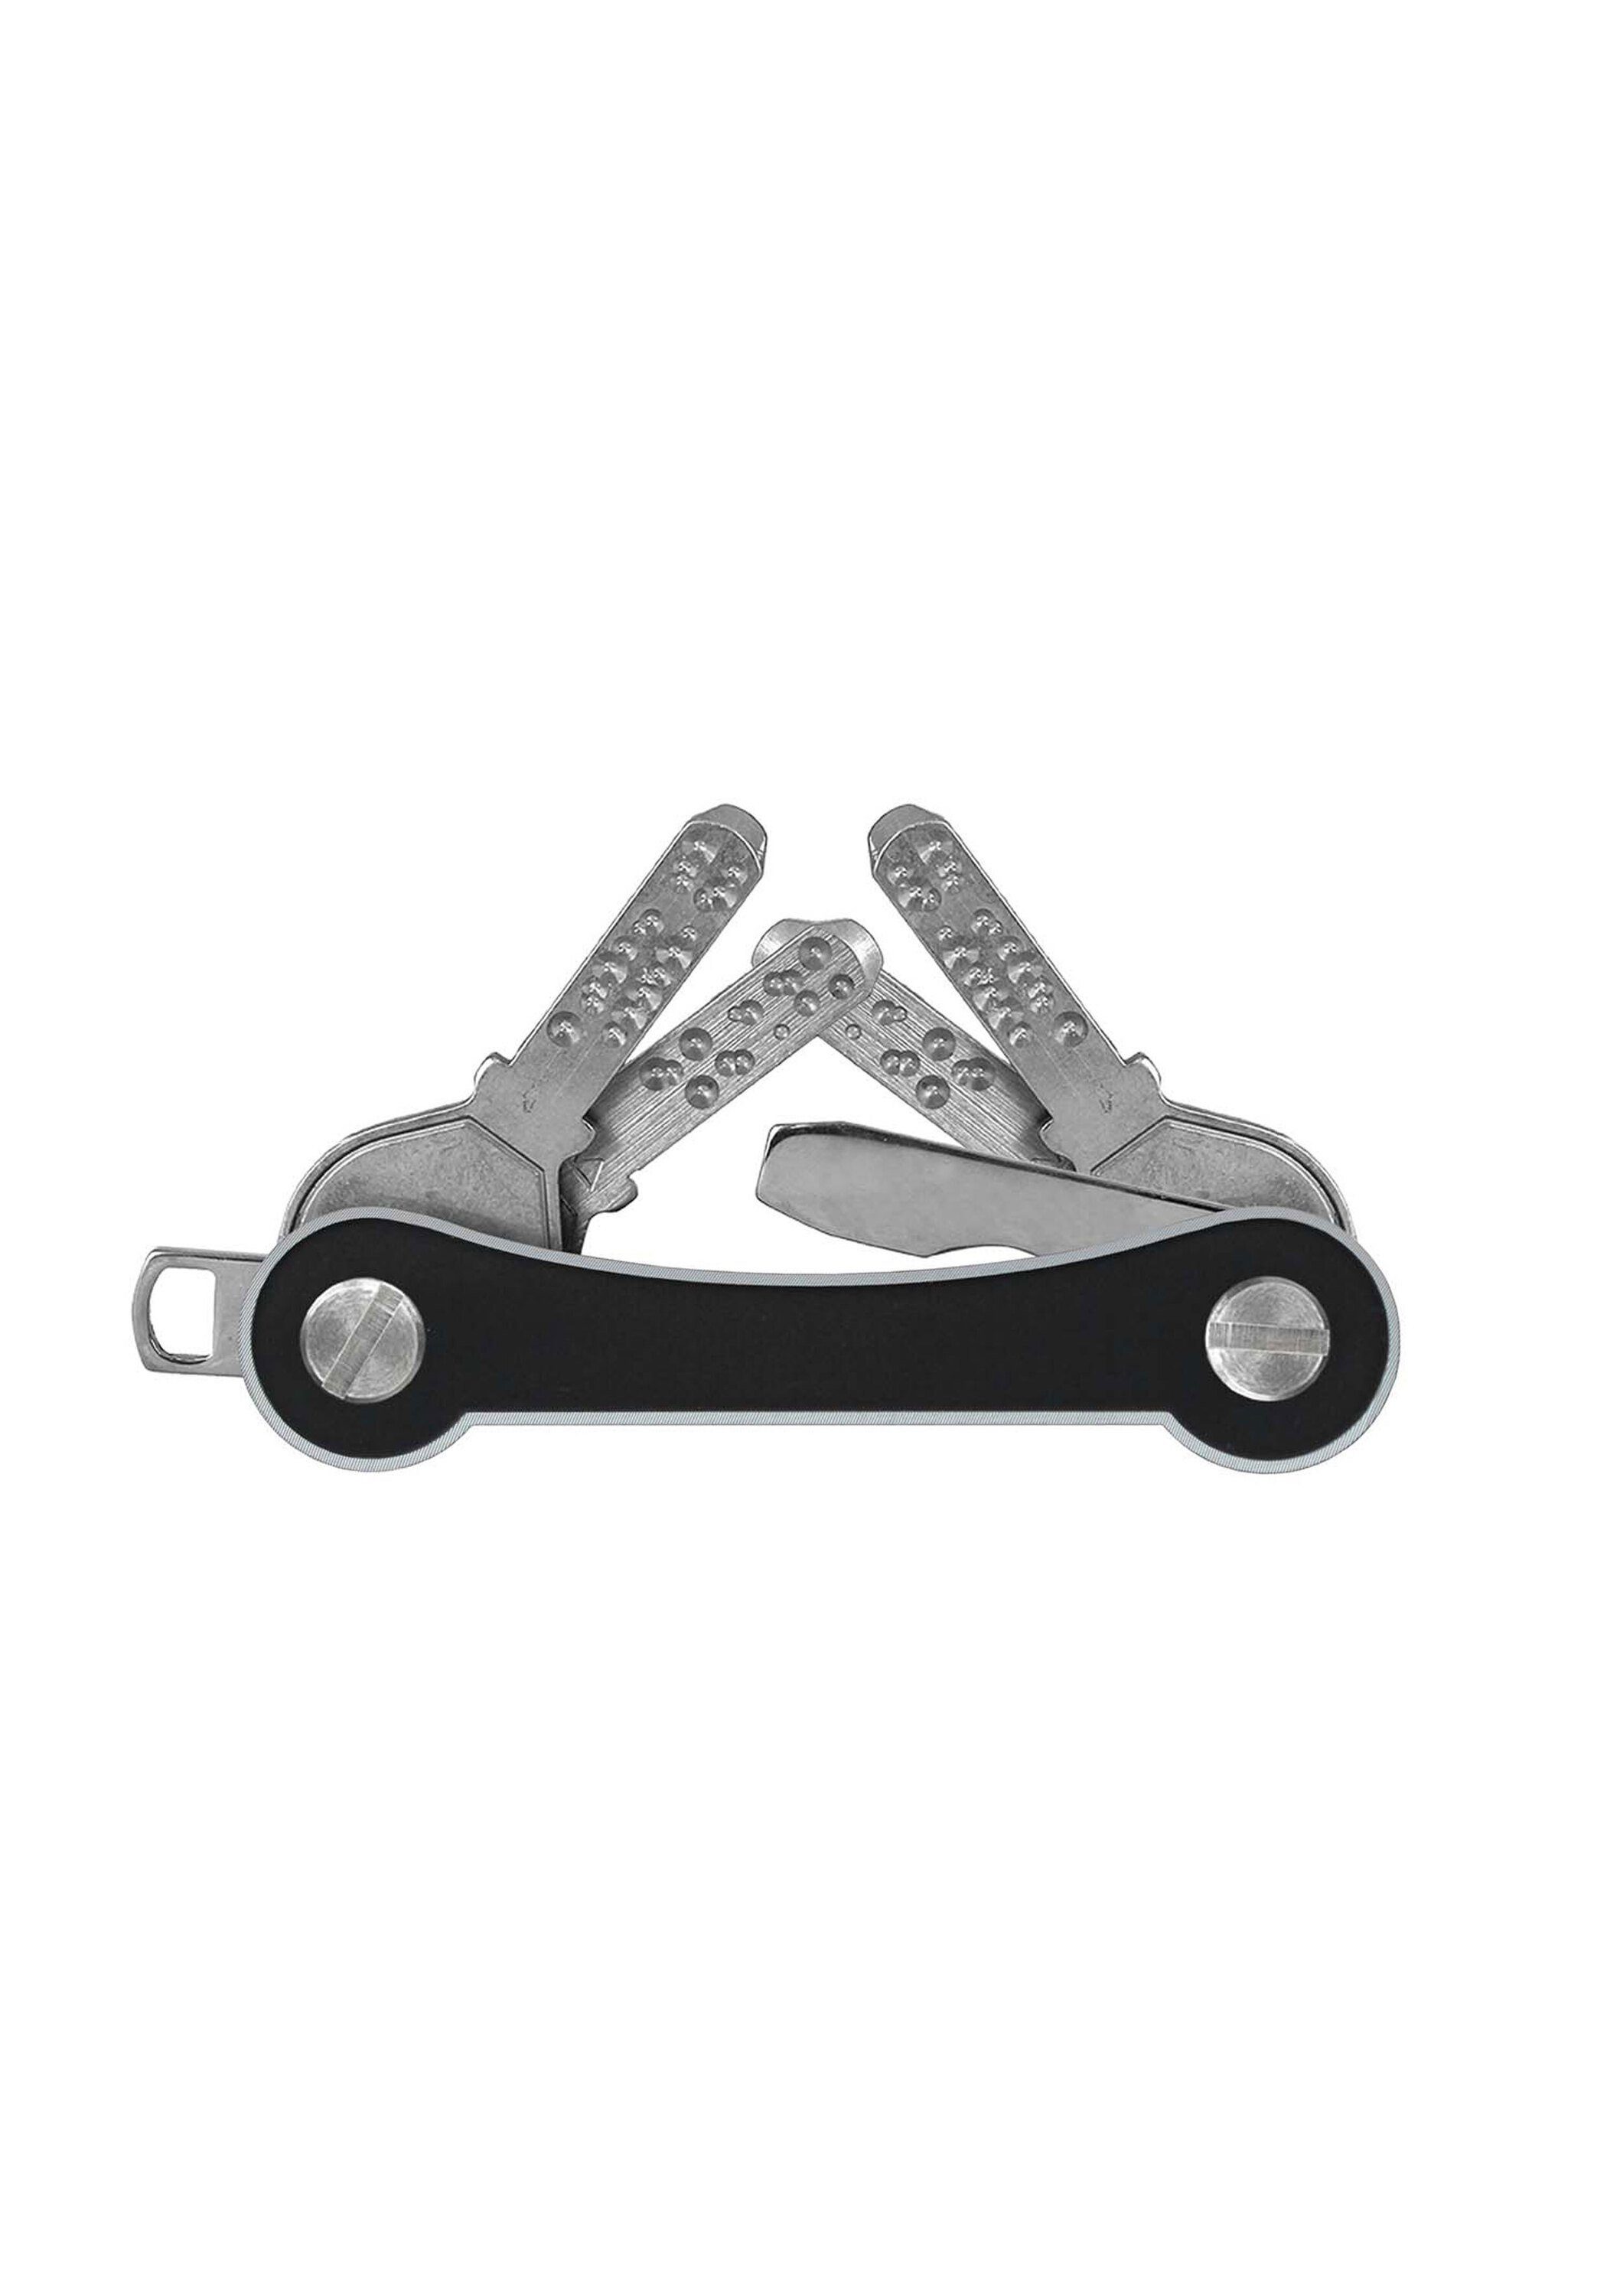 SWISS Aluminium Made keycabins Schlüsselanhänger frame, schwarz